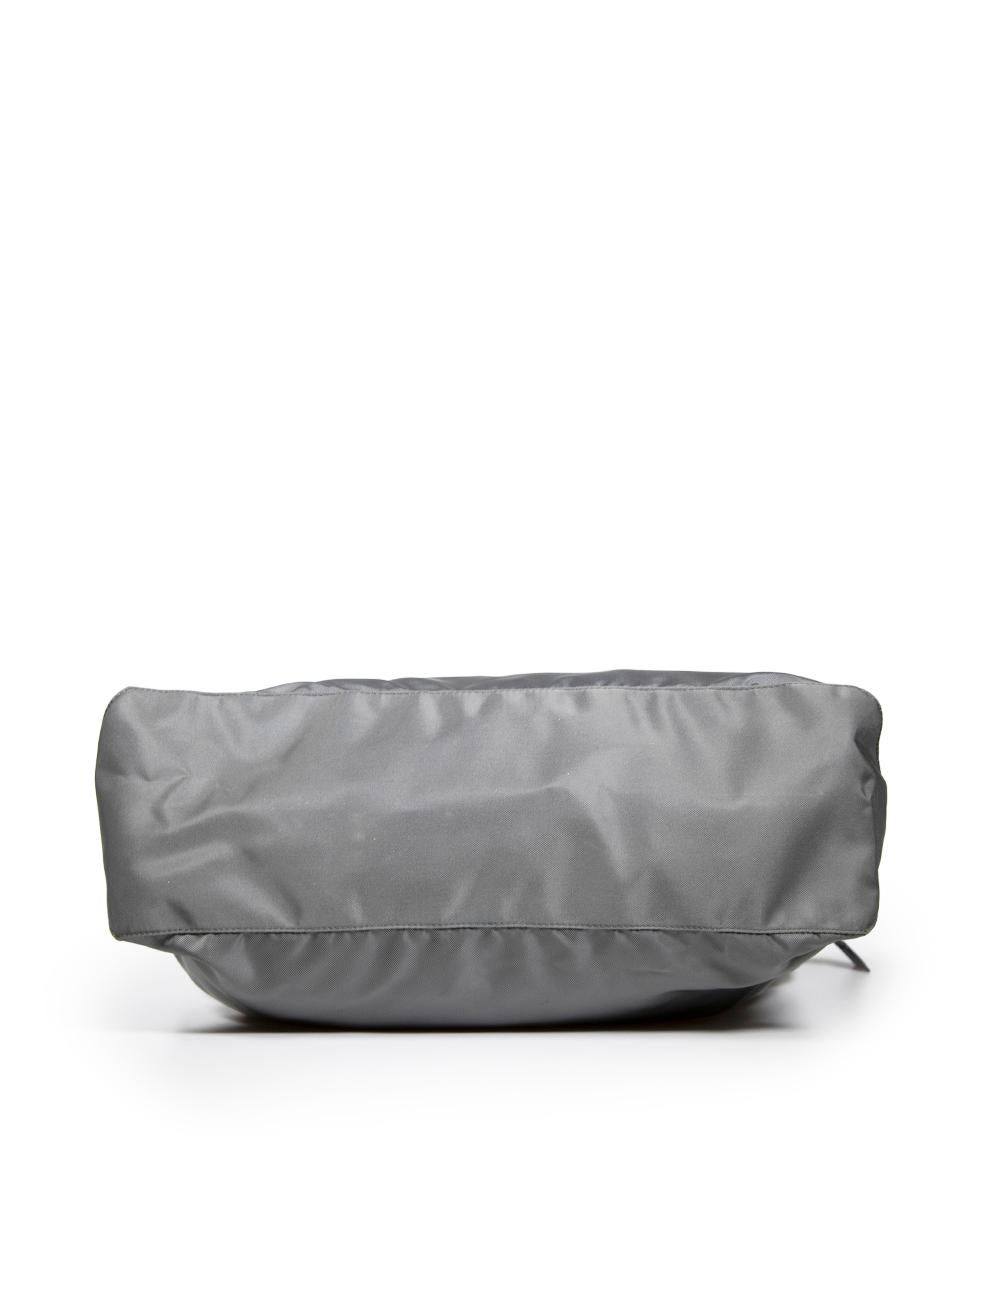 Women's Prada Grey Nylon Handbag For Sale